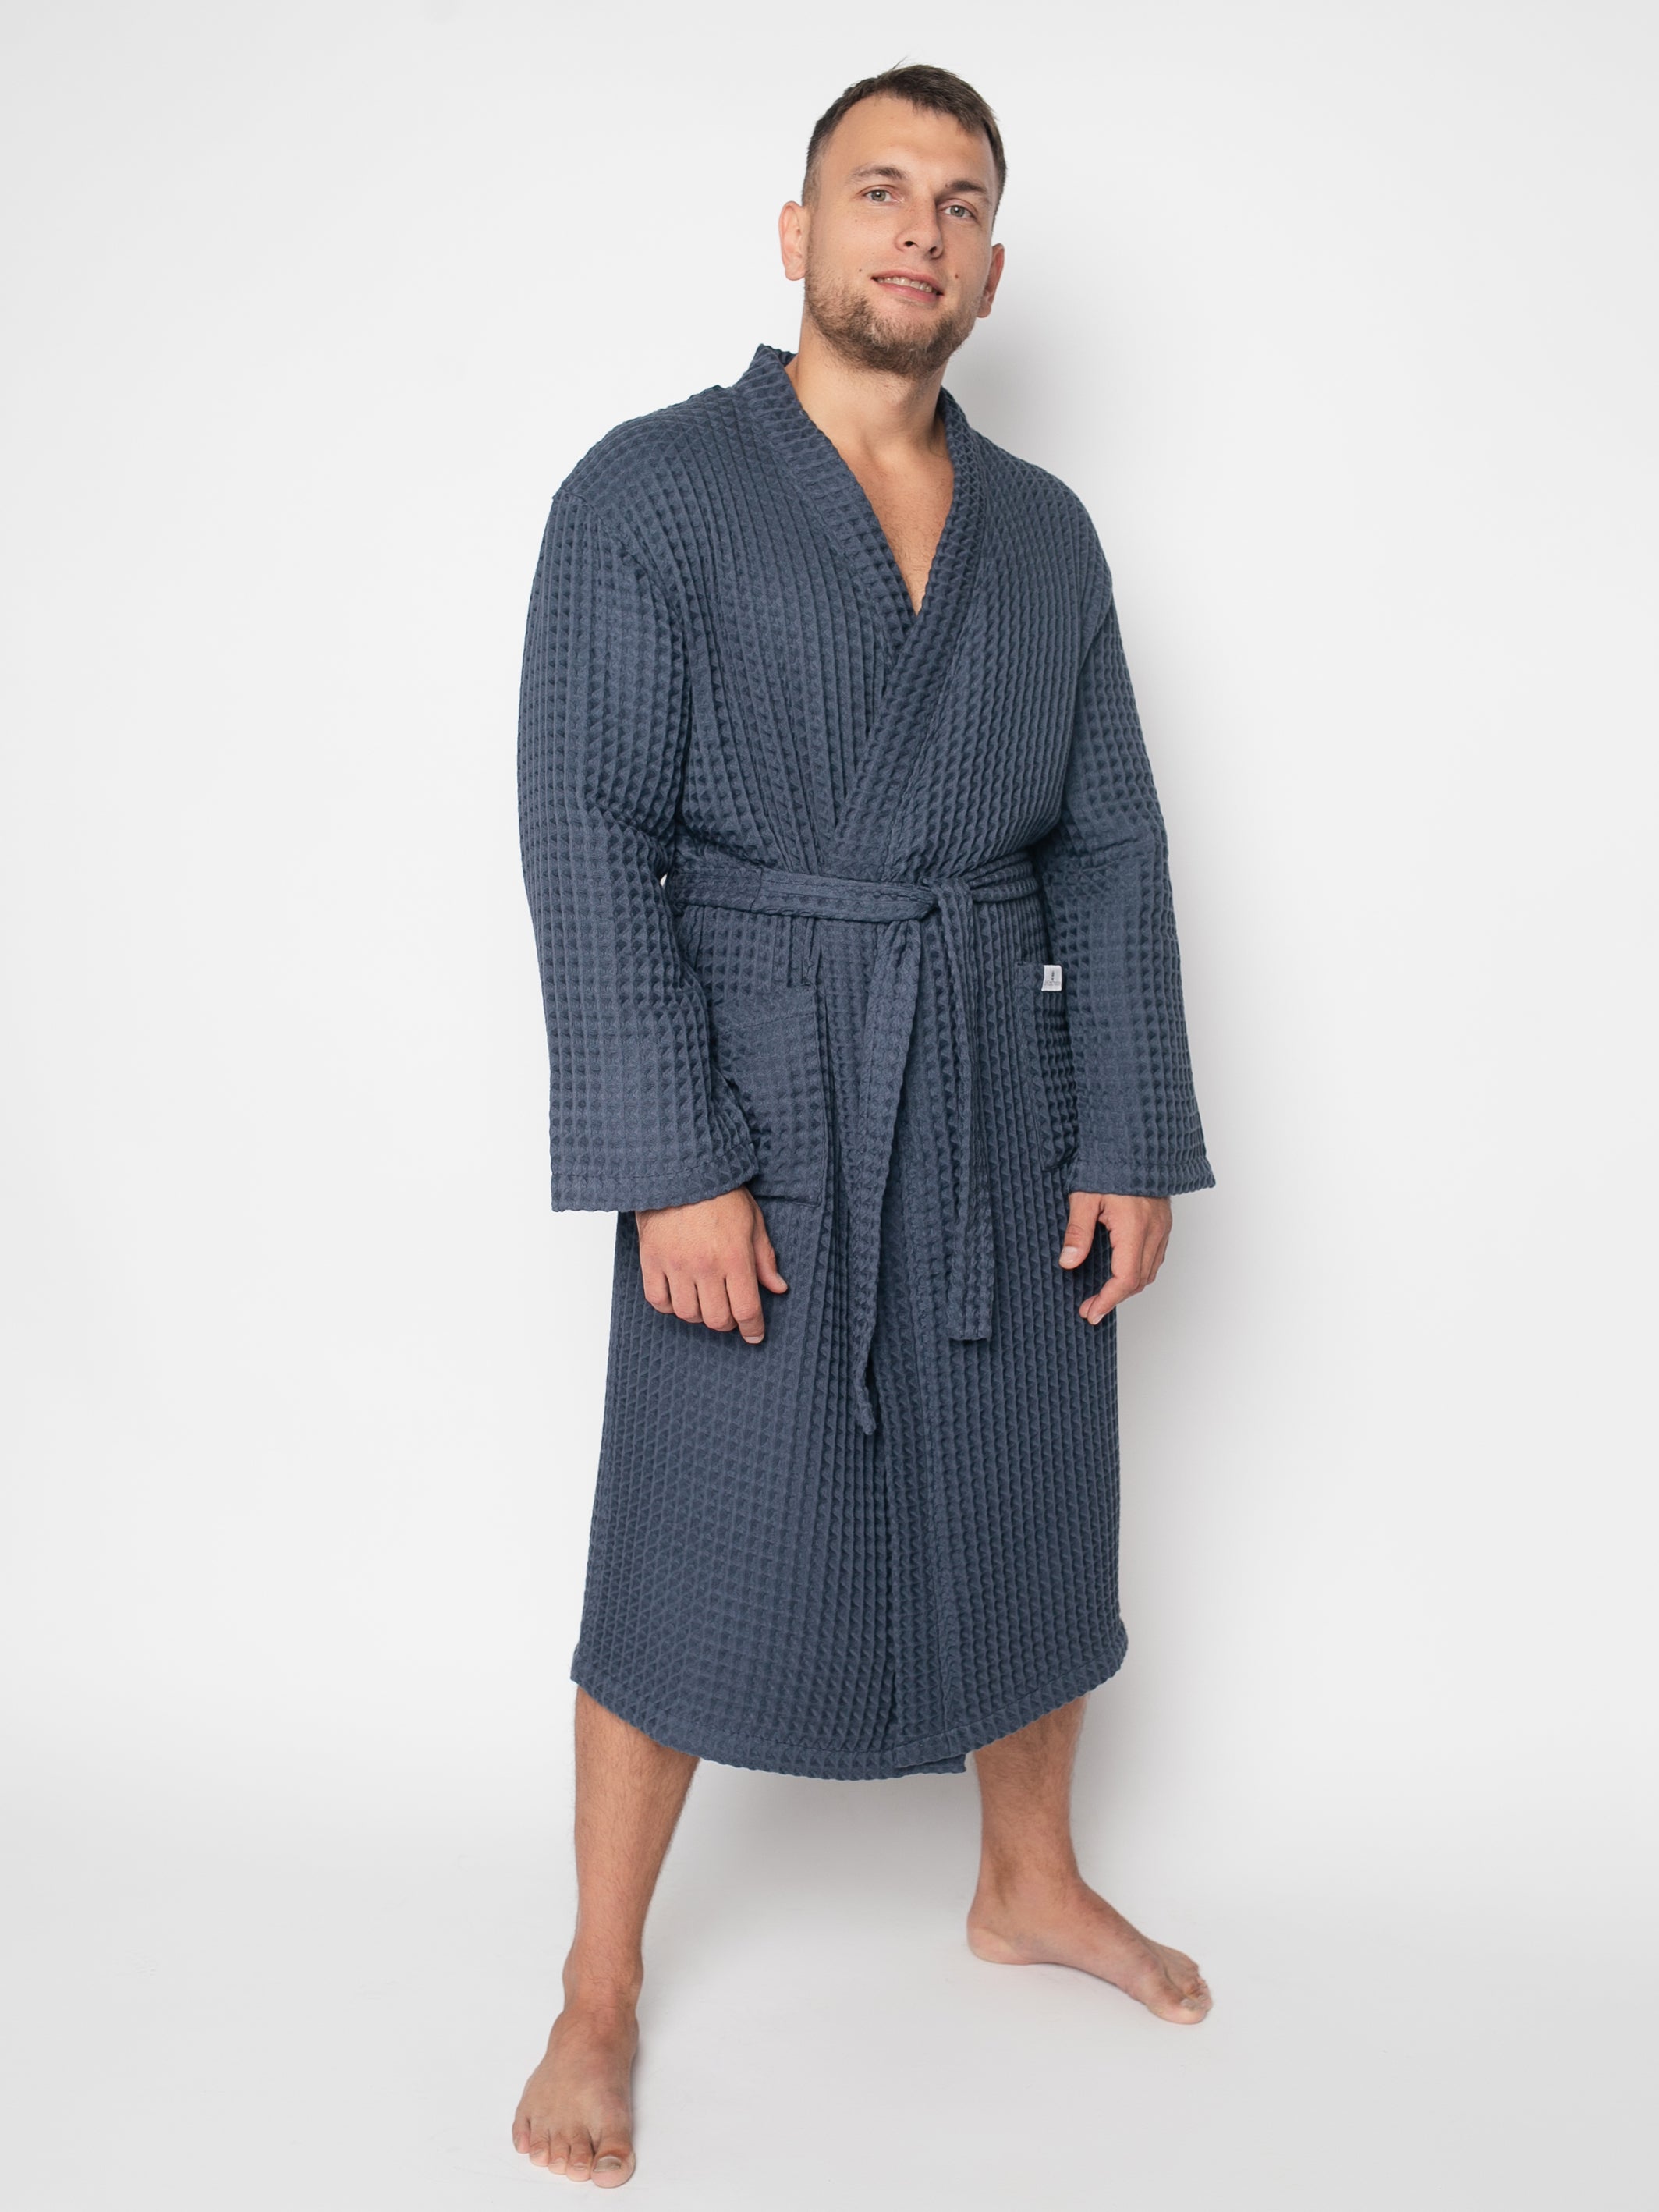 Men's cotton honeycomb bathrobe